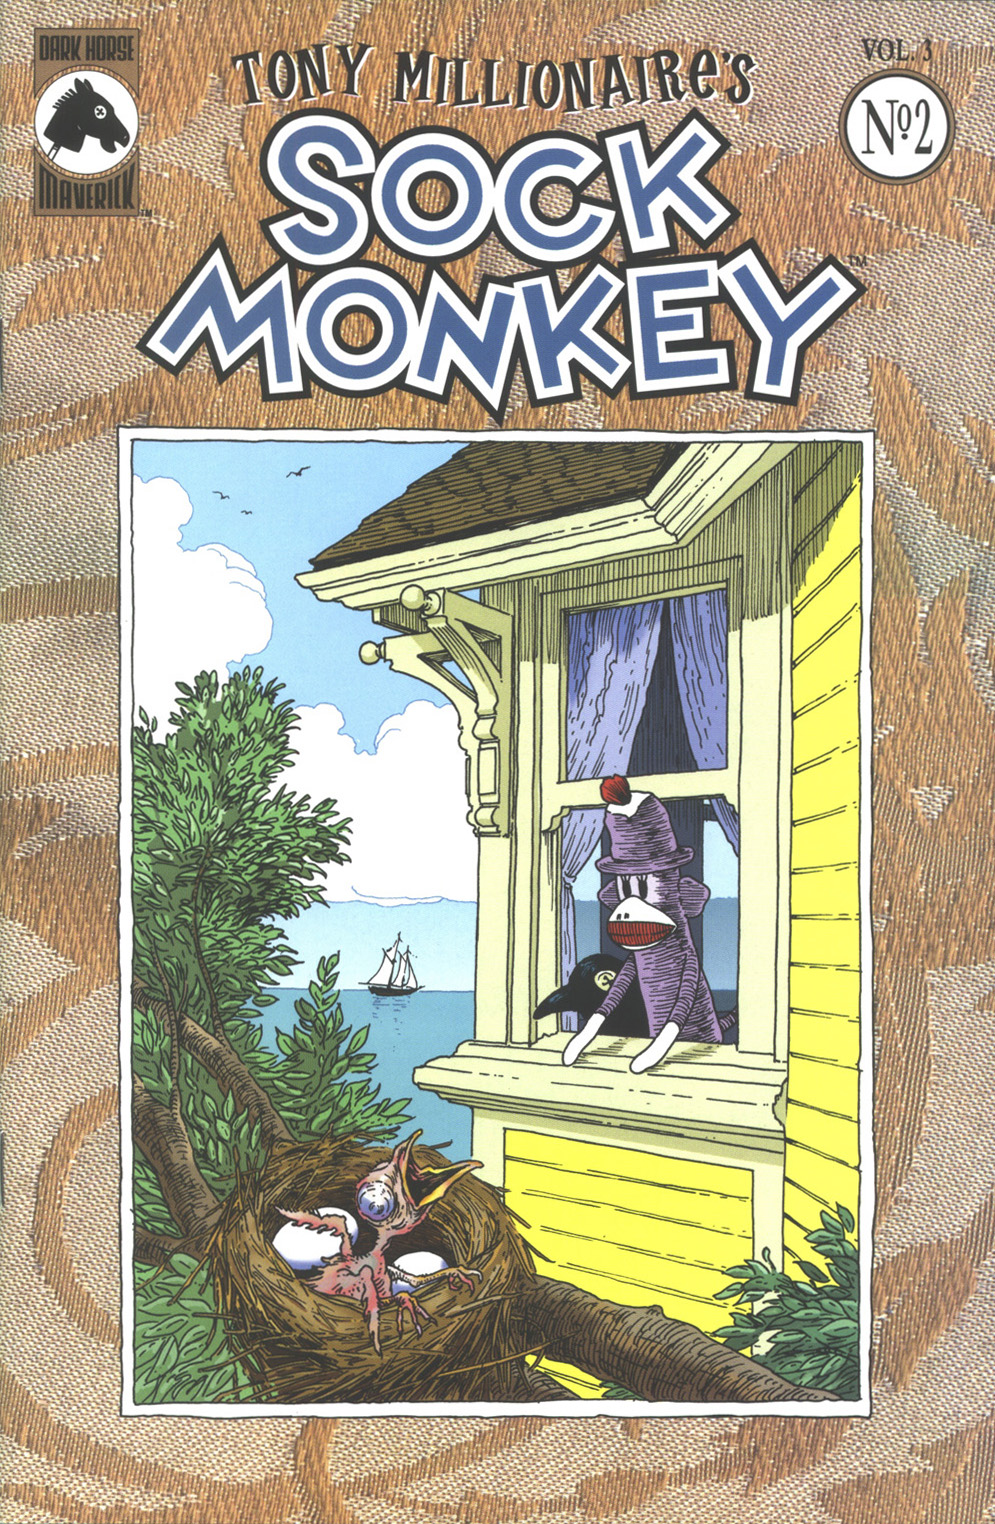 Read online Tony Millionaire's Sock Monkey (2000) comic -  Issue #2 - 1